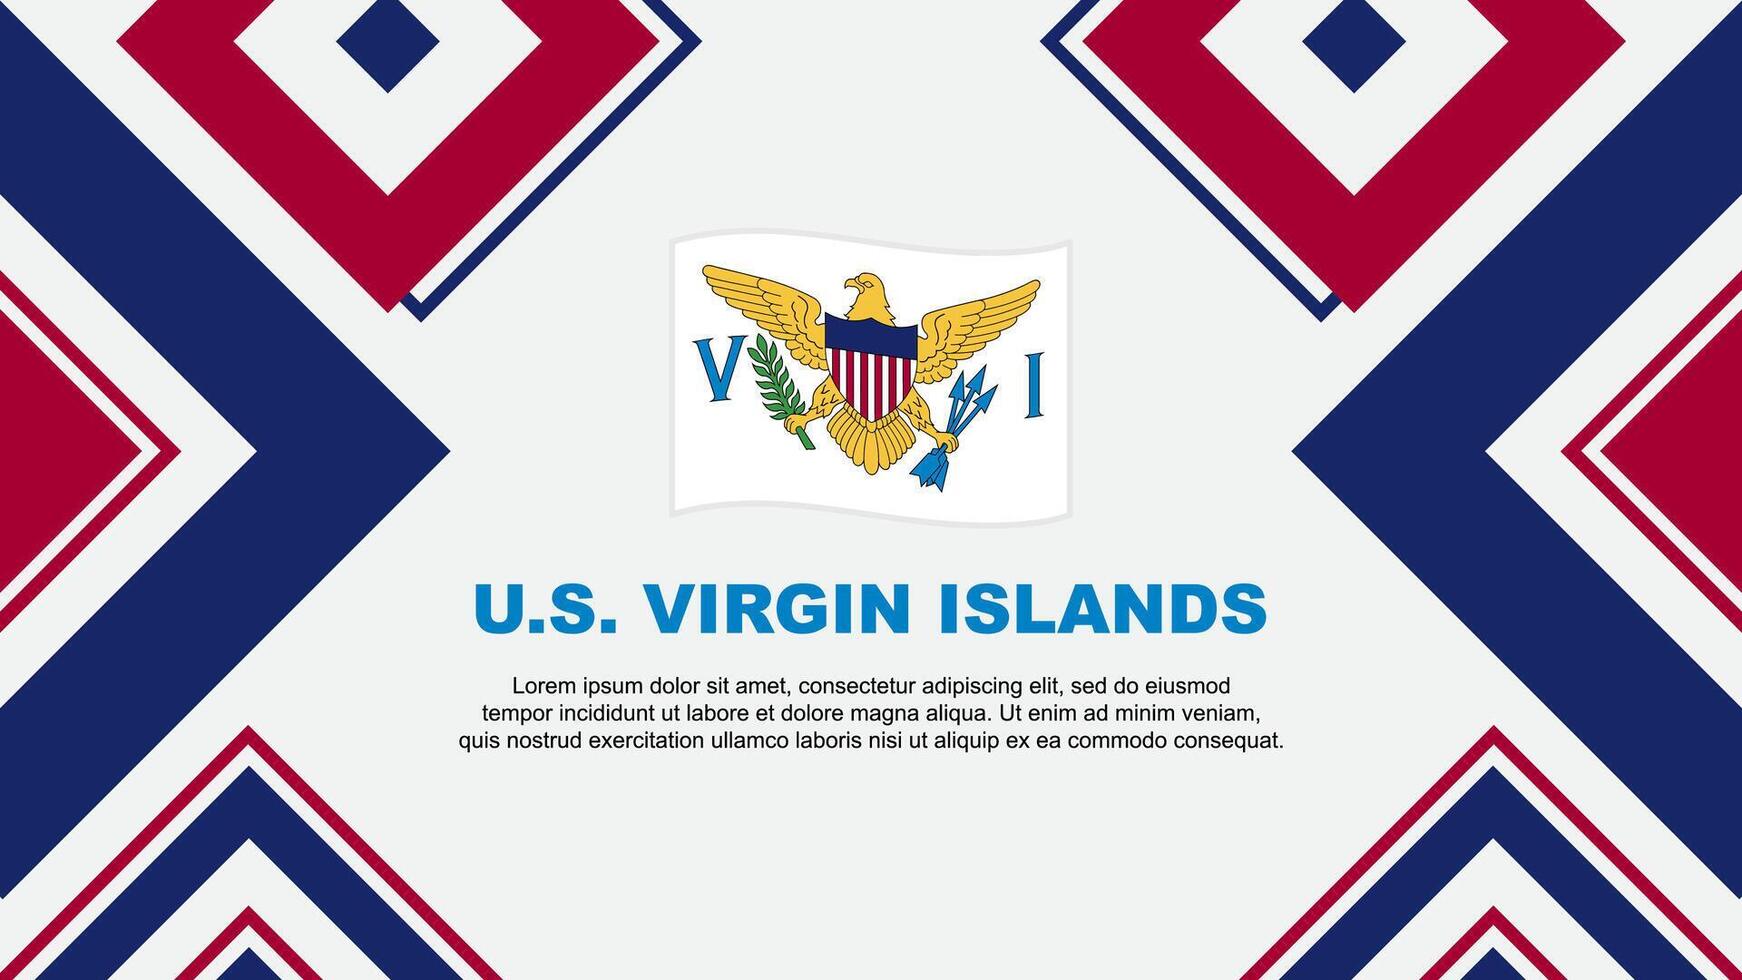 U.S. Virgin Islands Flag Abstract Background Design Template. U.S. Virgin Islands Independence Day Banner Wallpaper Vector Illustration. U.S. Virgin Islands Independence